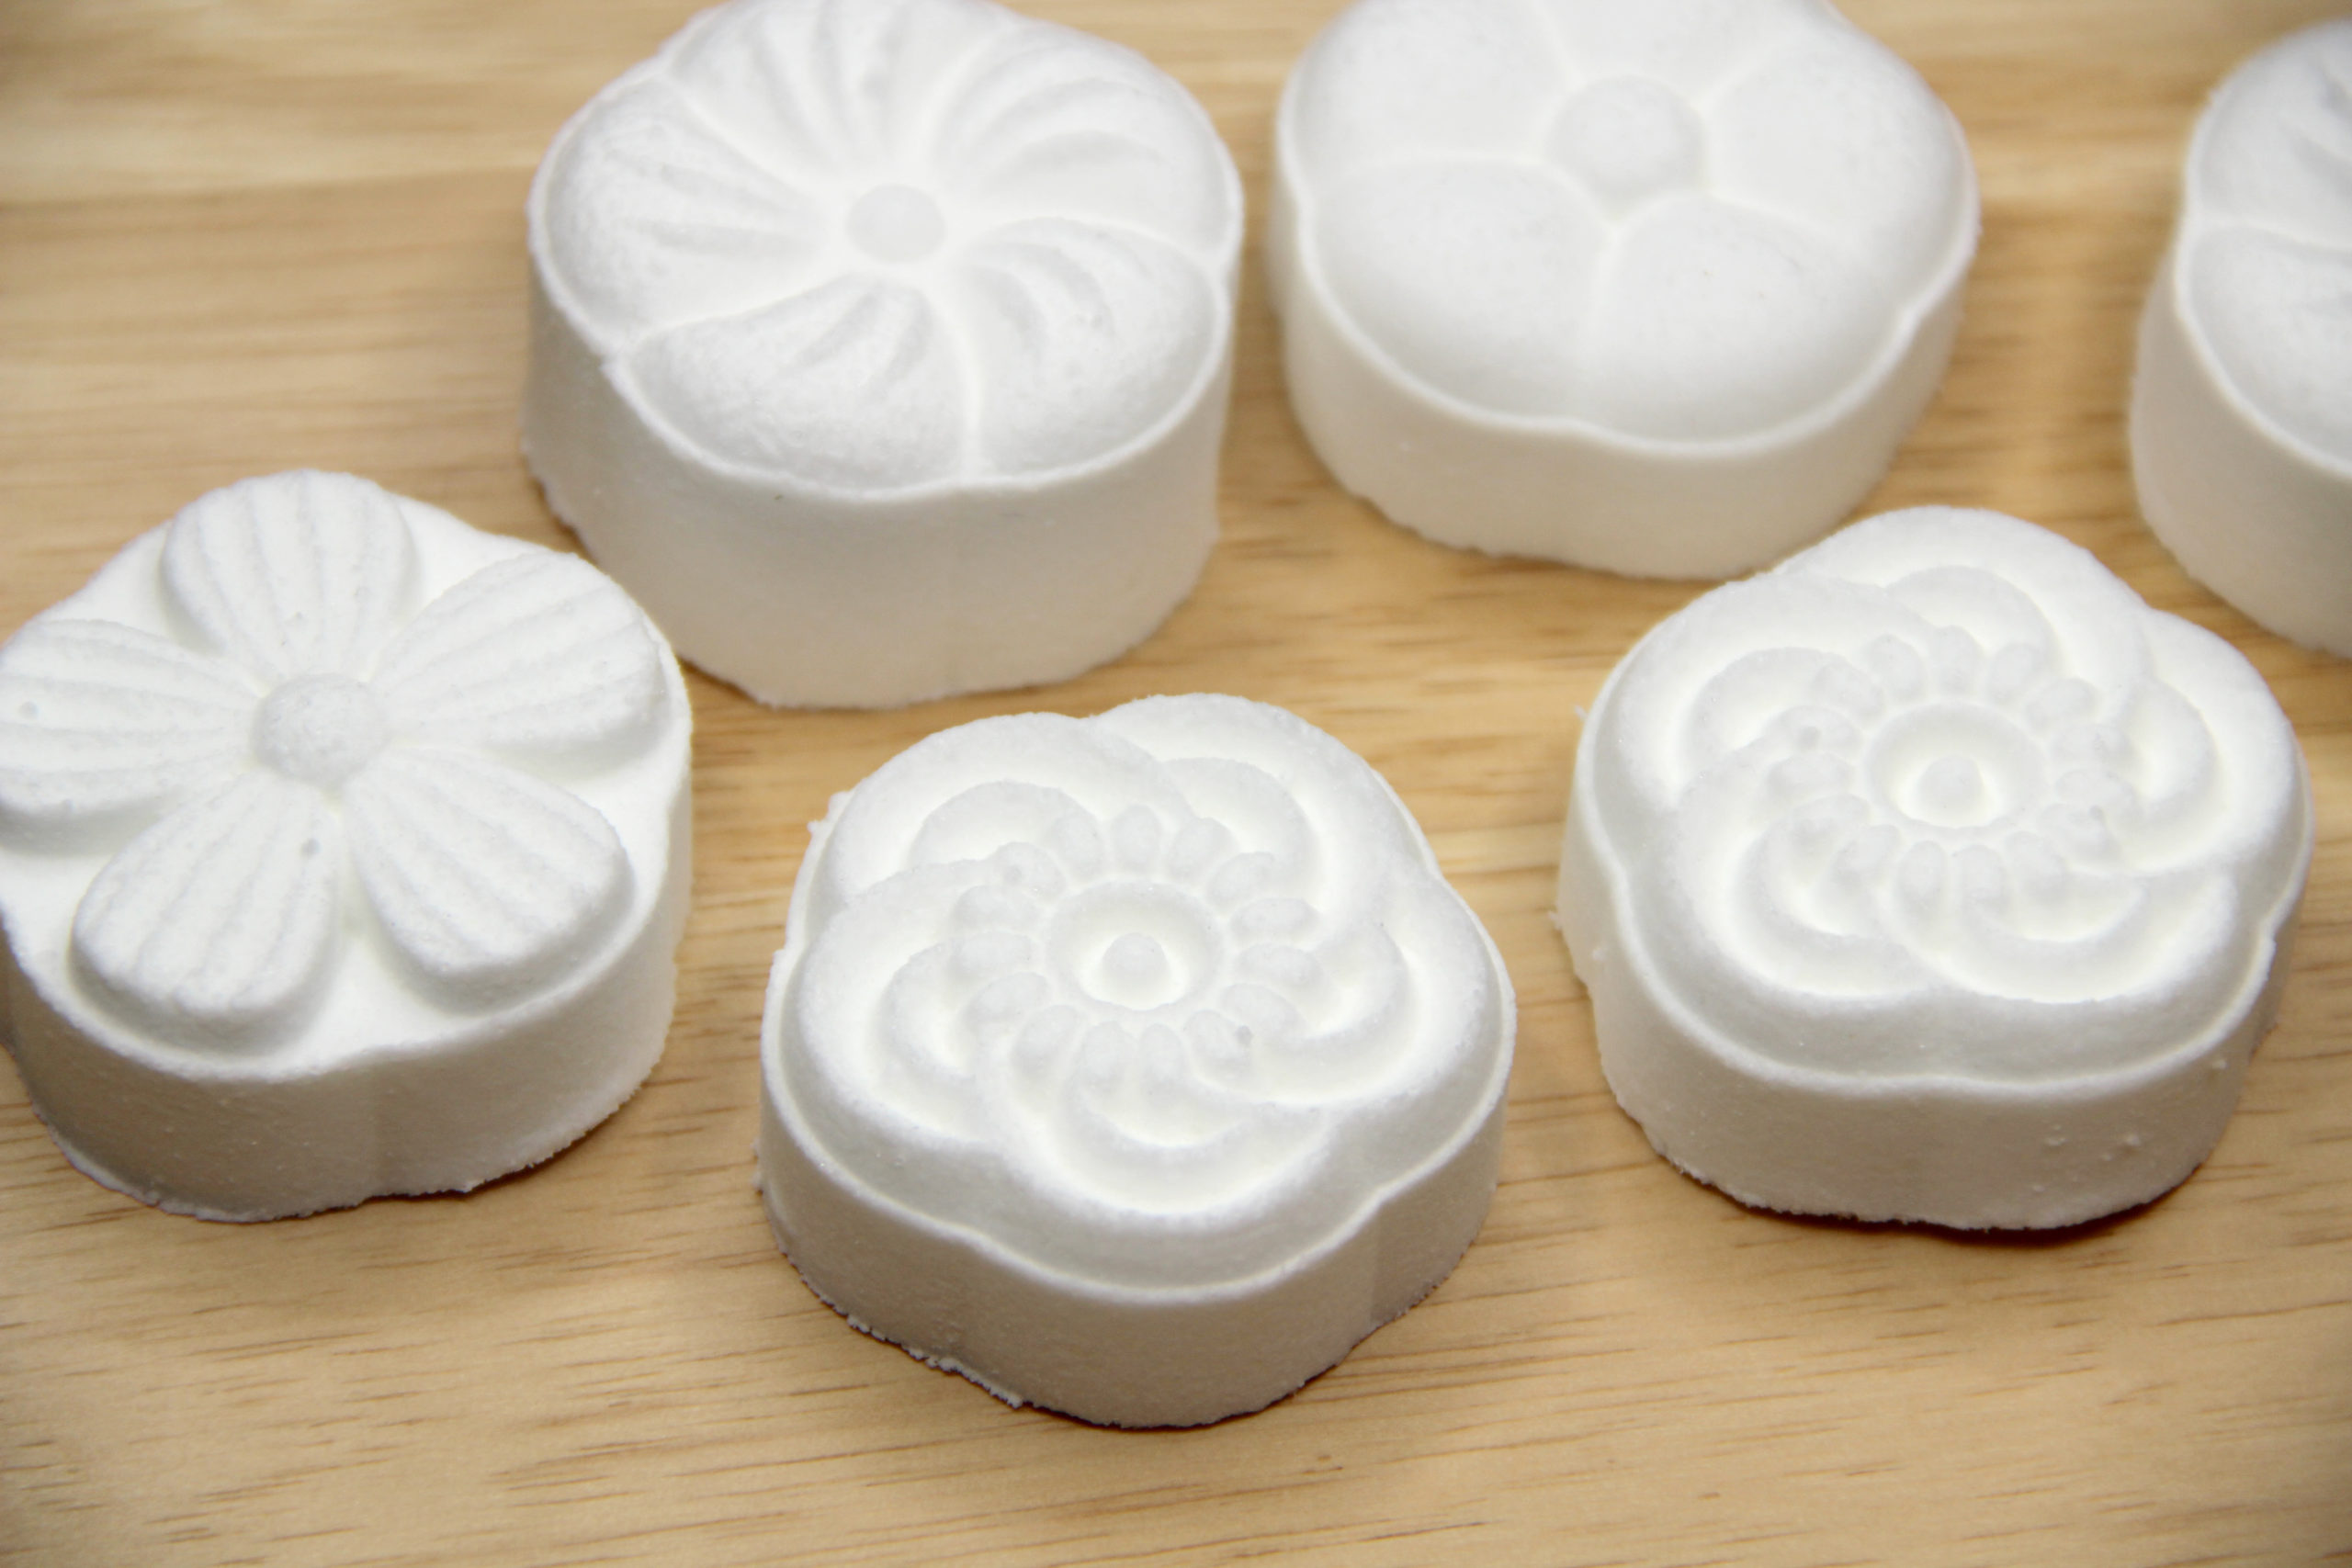 Easy Bath Bombs (Bath Fizzies) Using a Moon Cake Mold Press – Lovin Soap  Studio